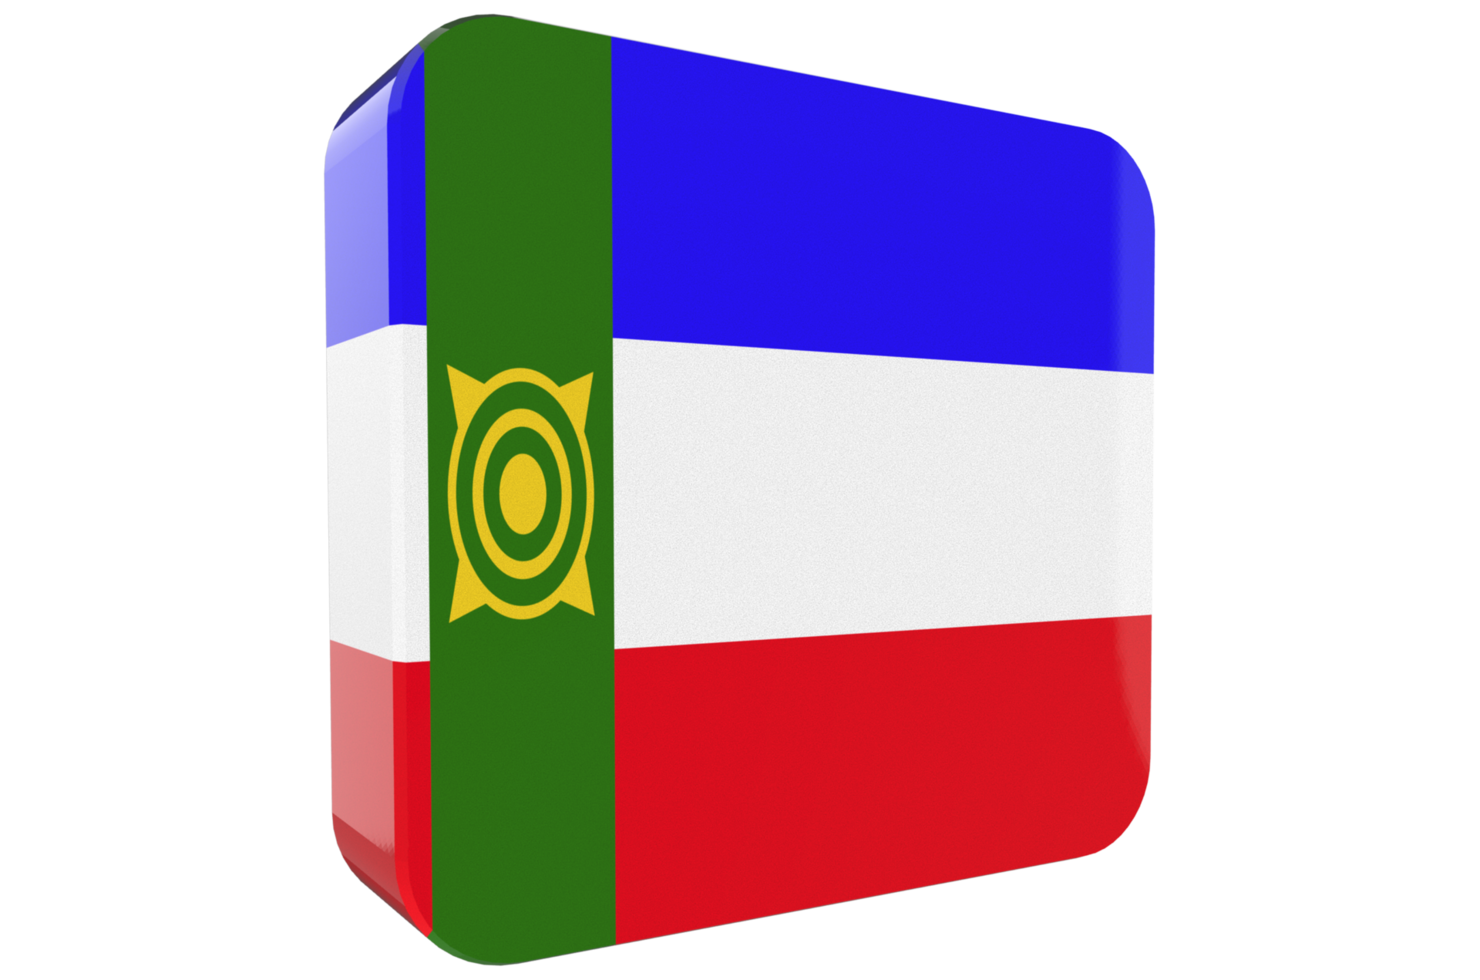 Khakassia 3d Flag Icon on PNG Background